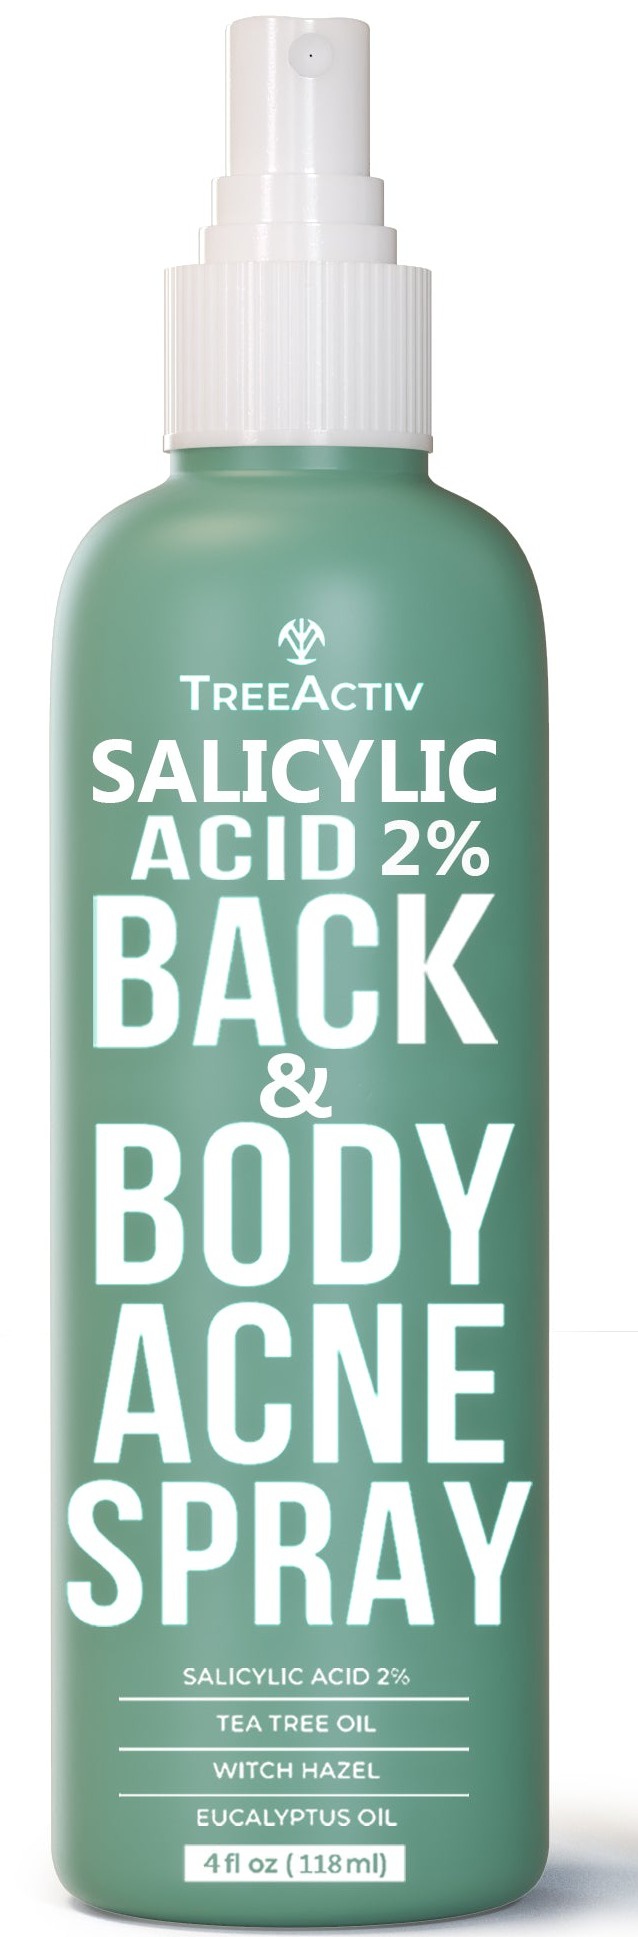 TreeActiv Back & Body Spray